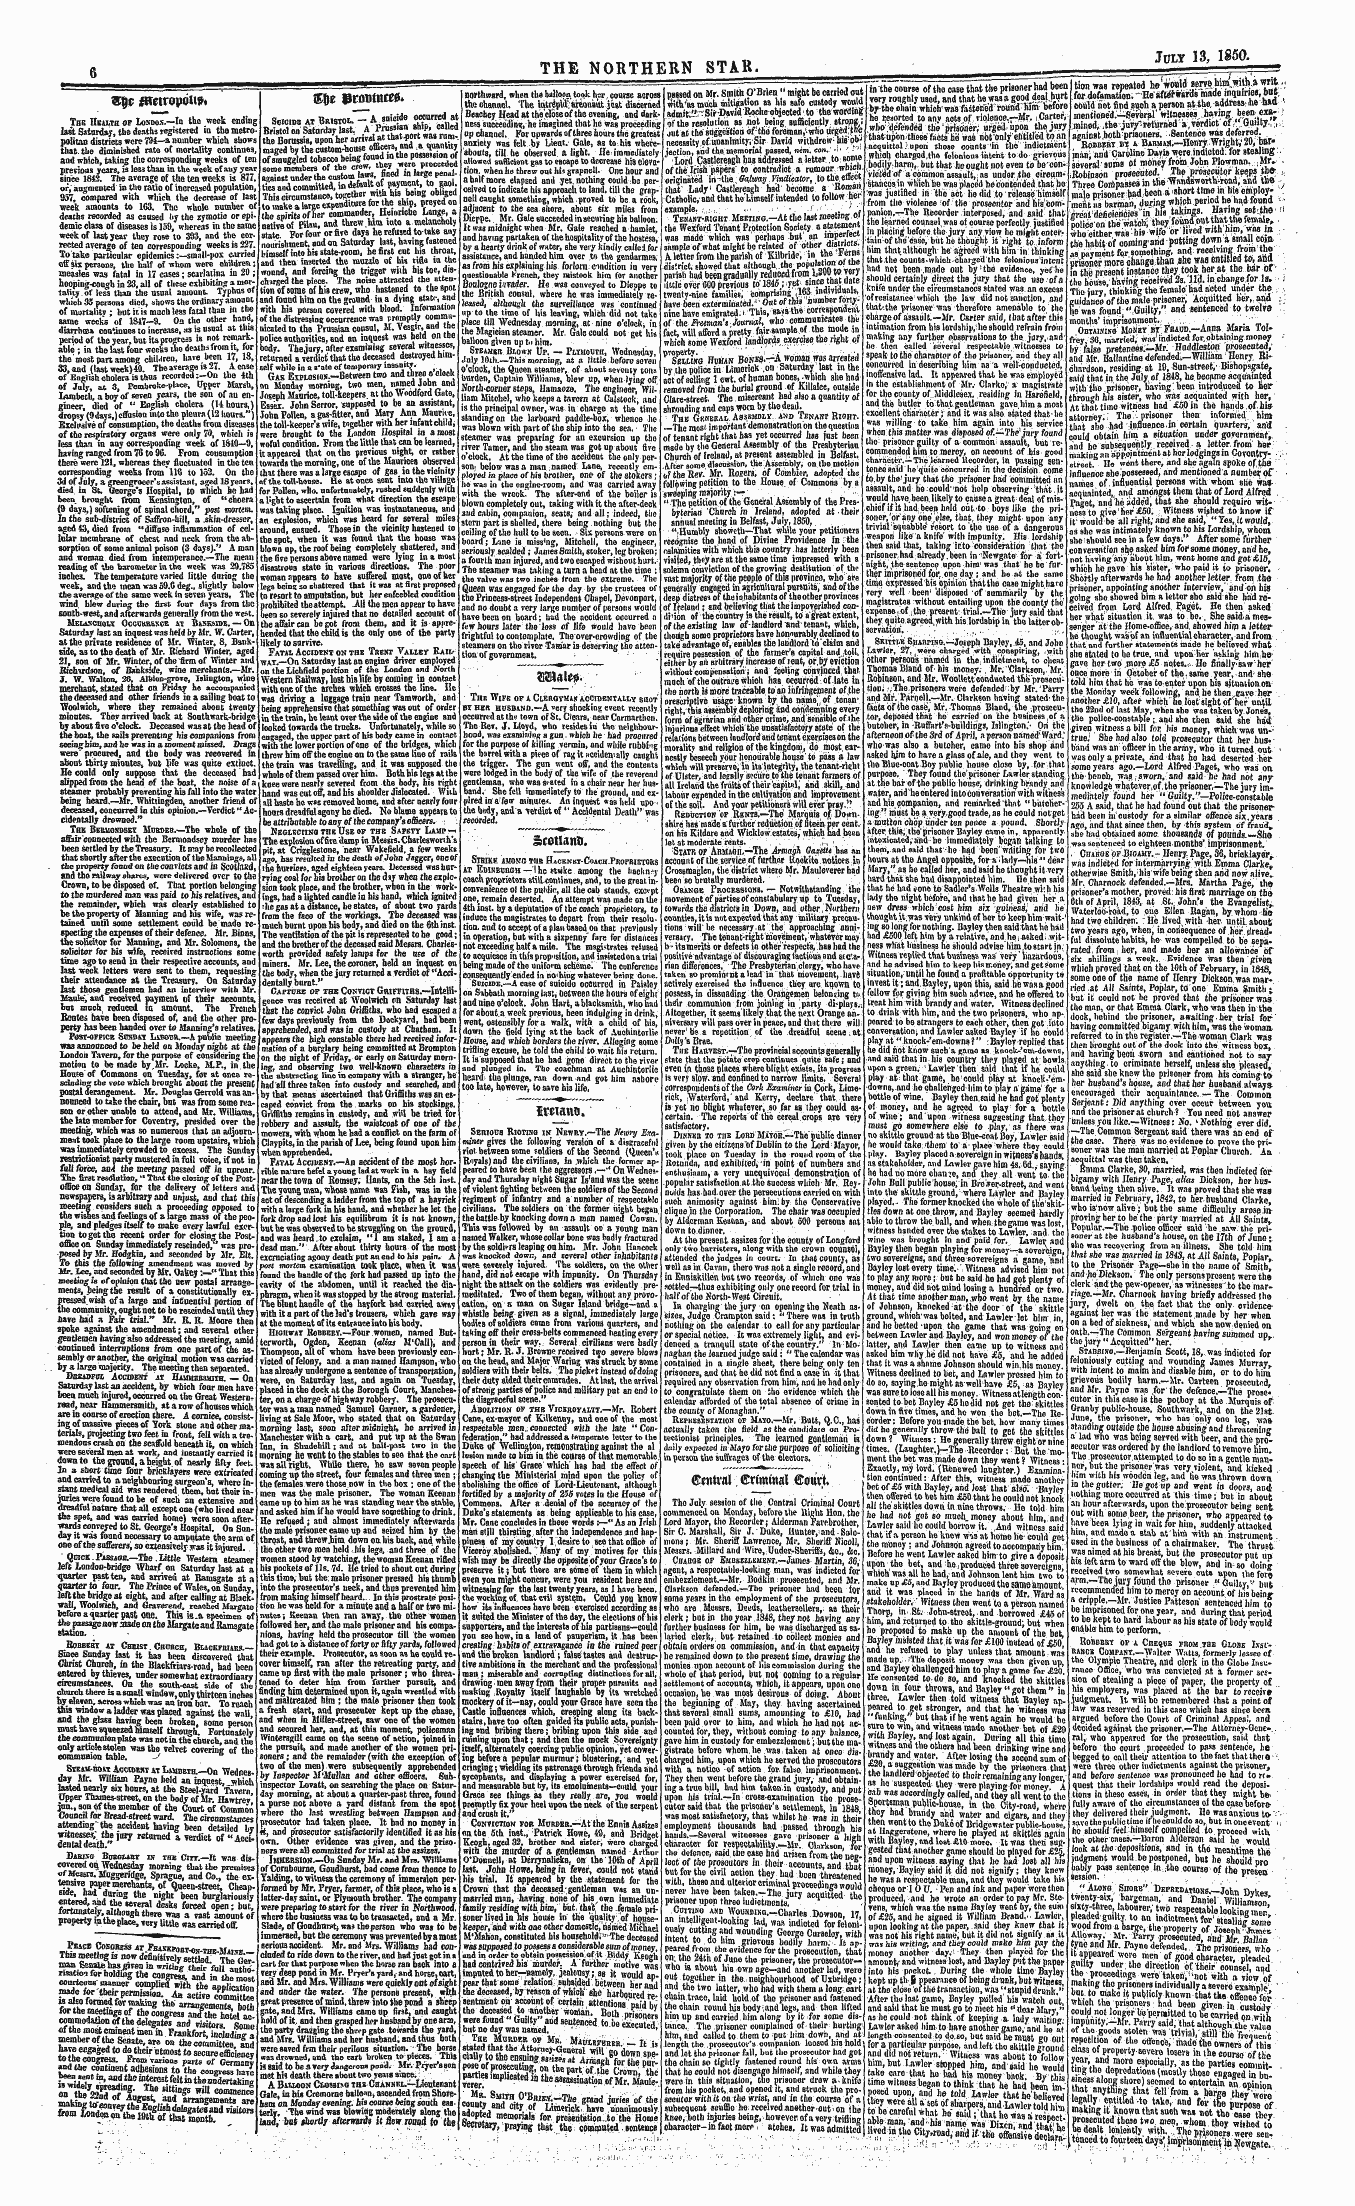 Northern Star (1837-1852): jS F Y, 3rd edition - Gmttral; ©Tc-Mmal ©Omi